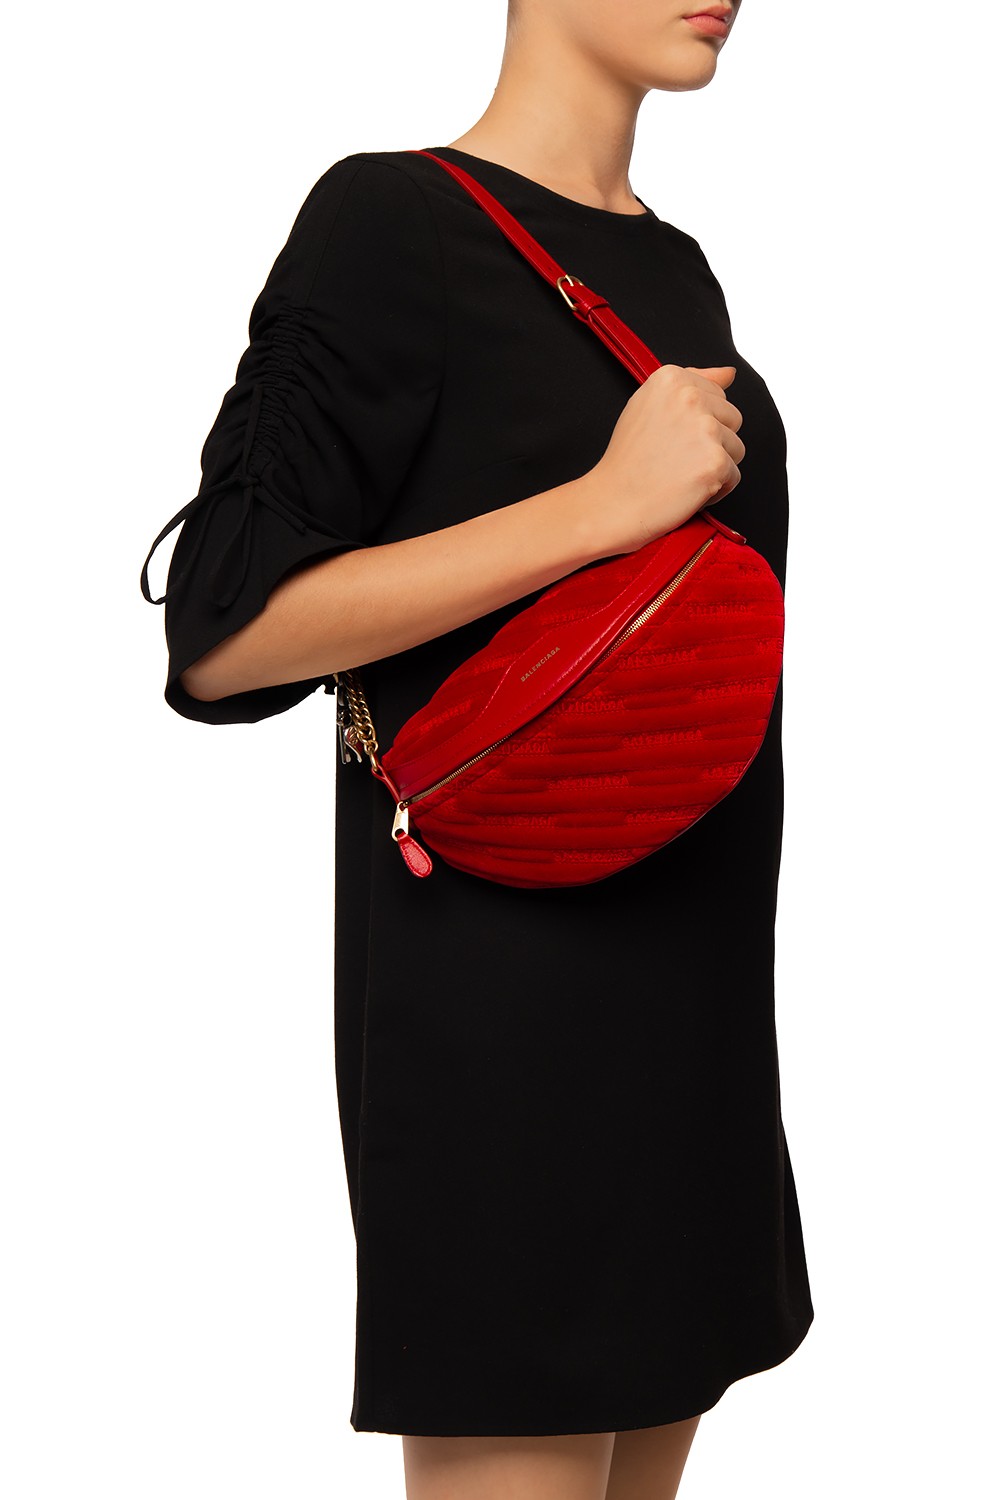 Jual Balenciaga waistbag / balenciaga graffiti belt bag / waistbag unisex /  waistbag import murah | Shopee Indonesia